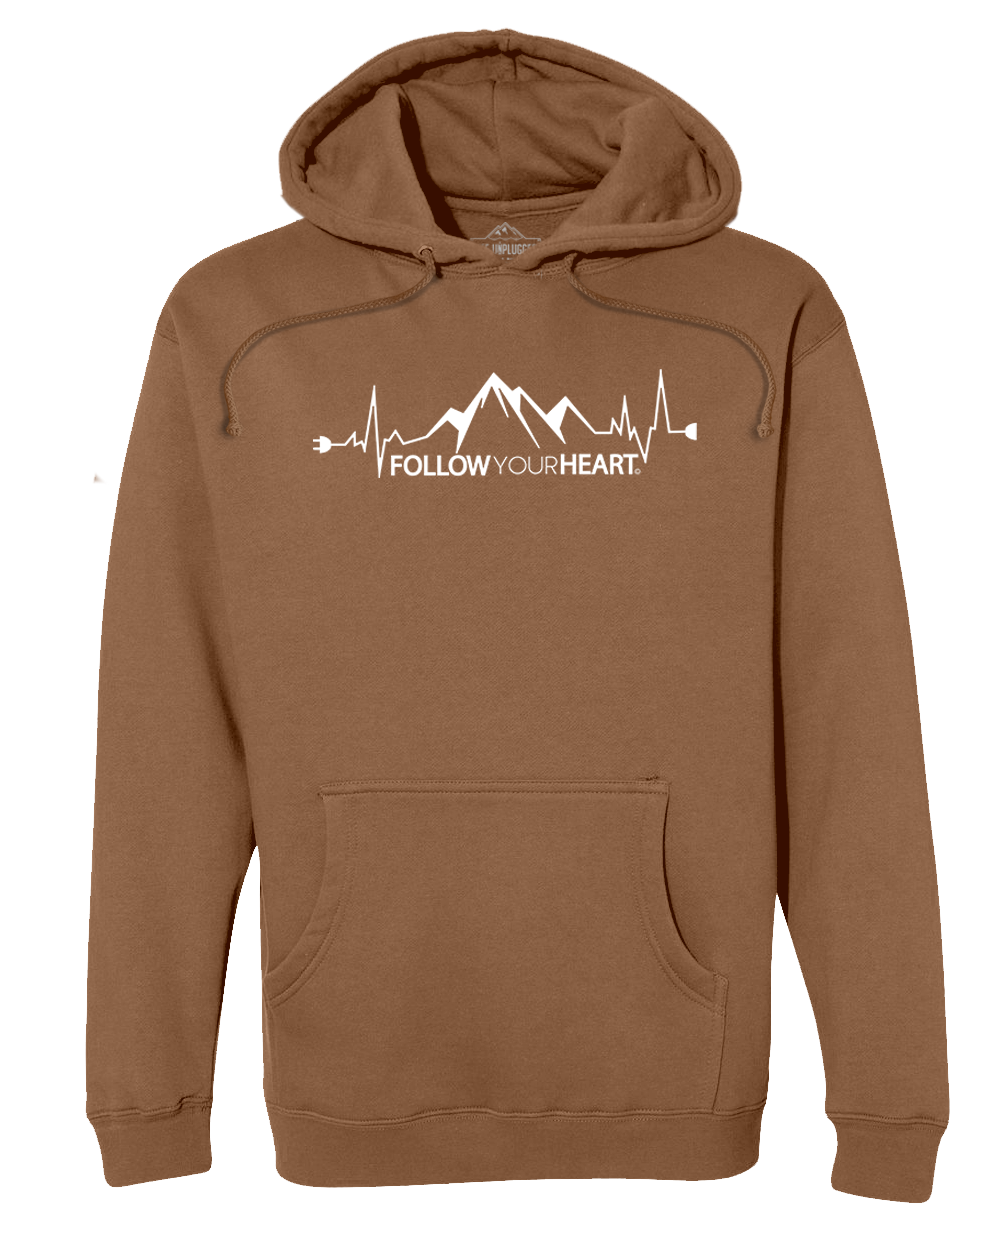 FOLLOW YOUR HEART Premium Heavyweight Hooded Sweatshirt